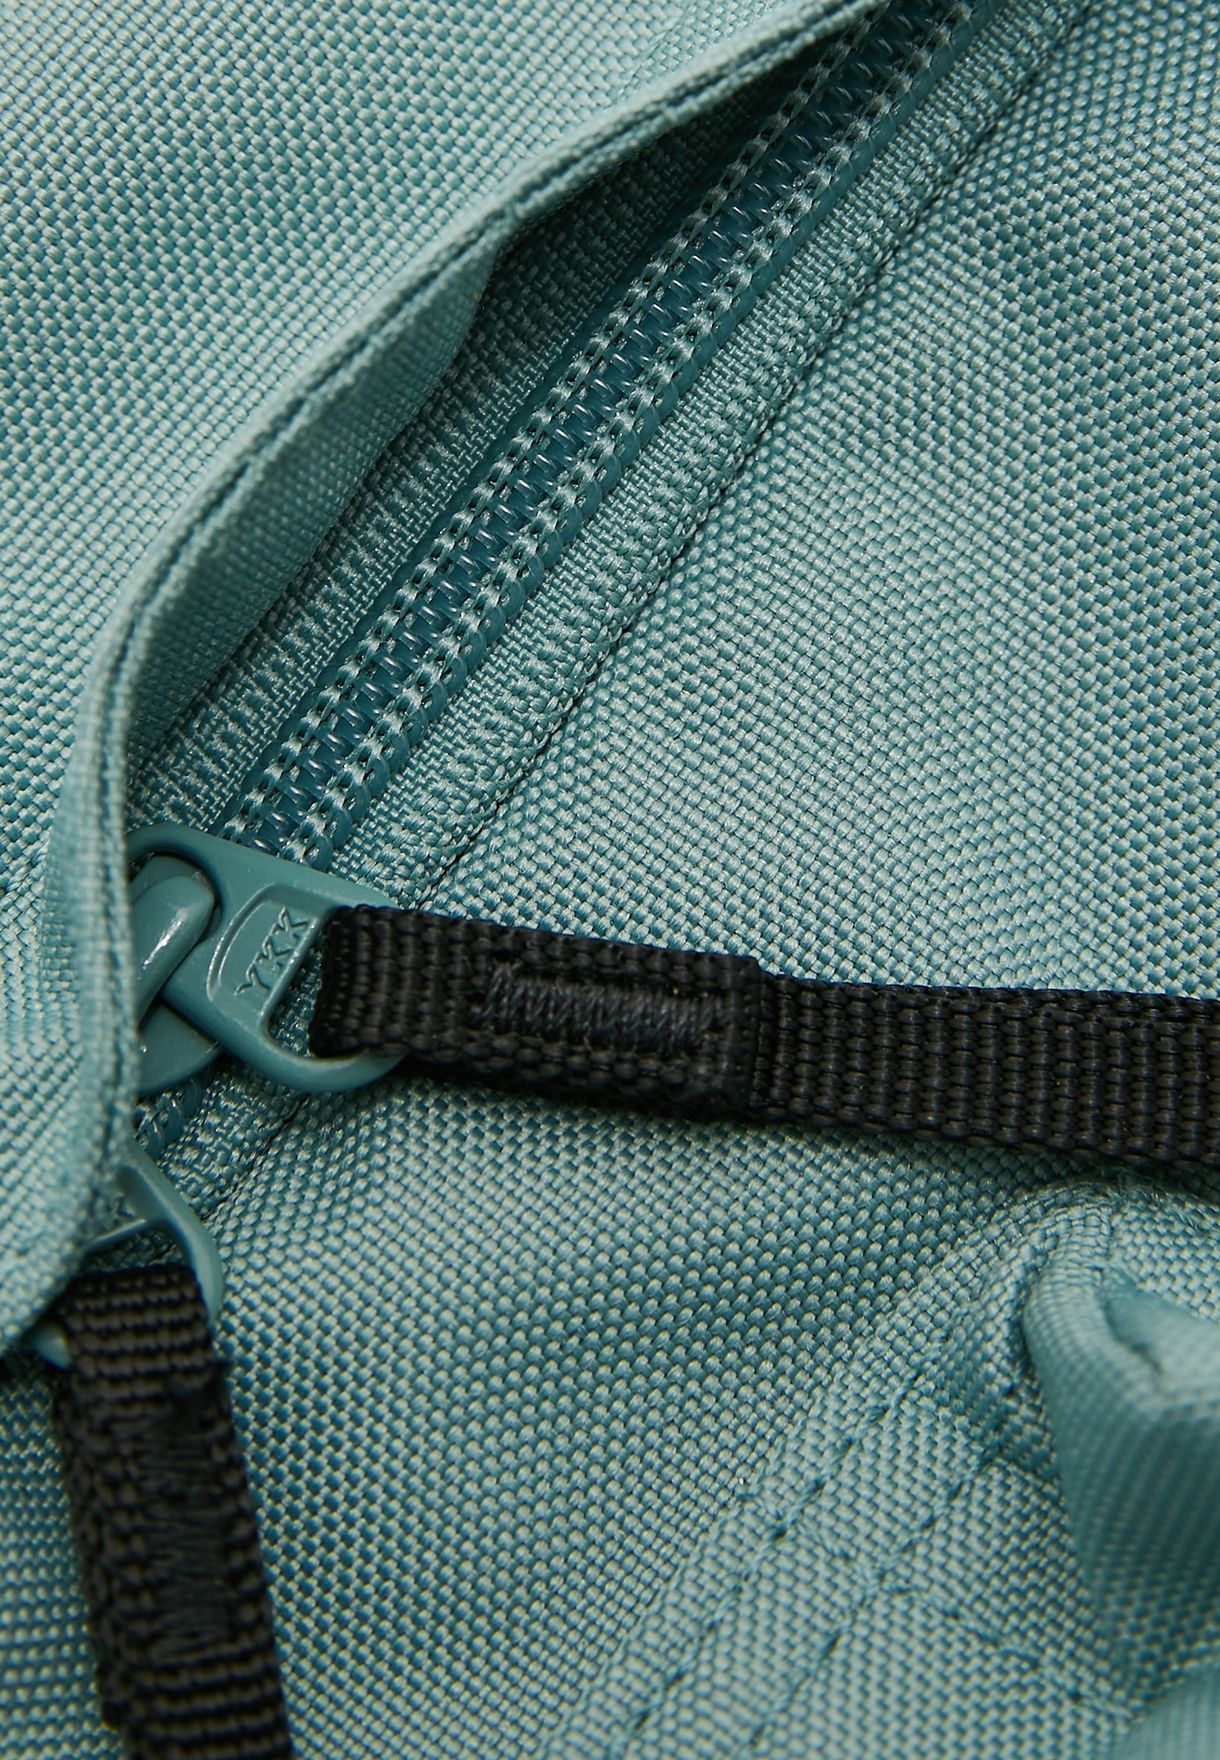 Kids Adjustable Handle Backpack